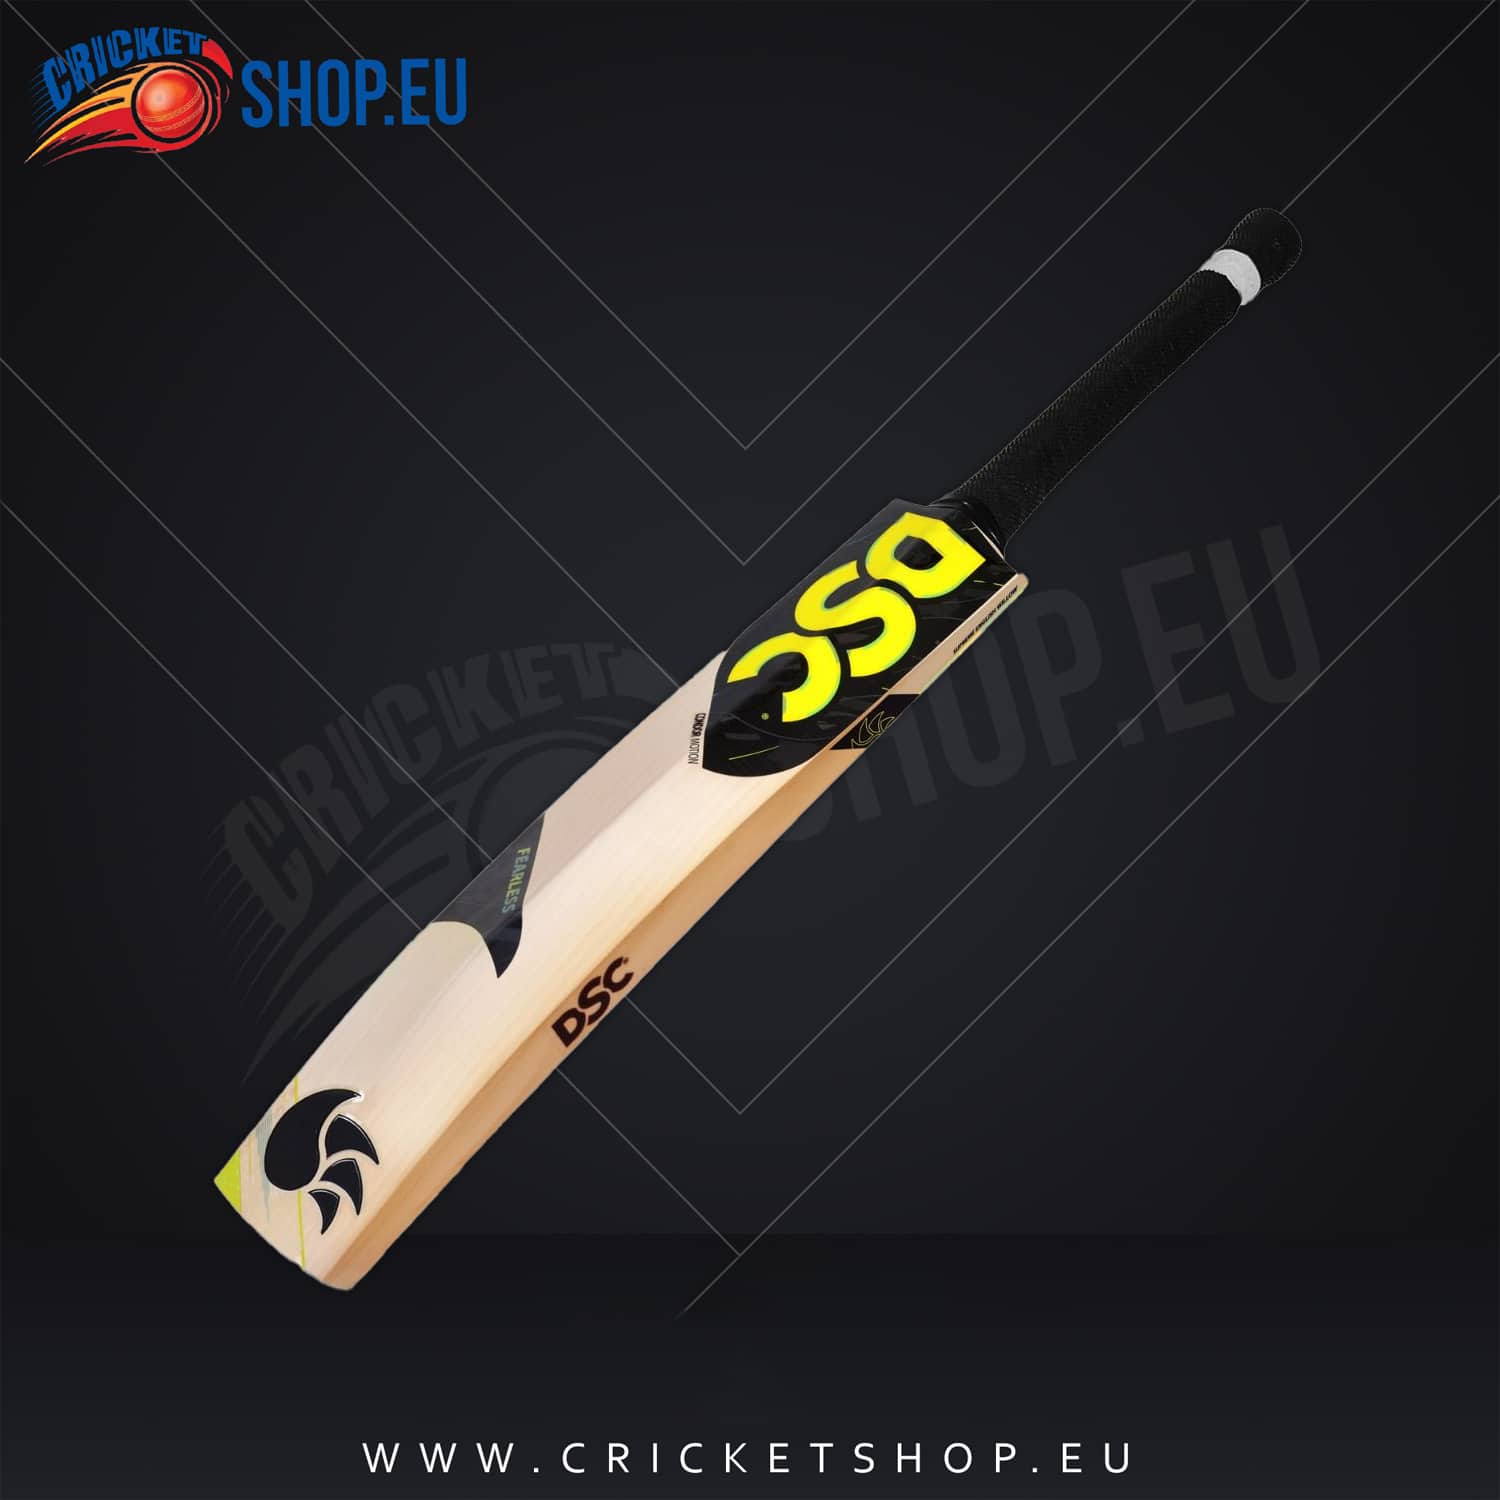 DSC Condor Motion English Willow Cricket Bat